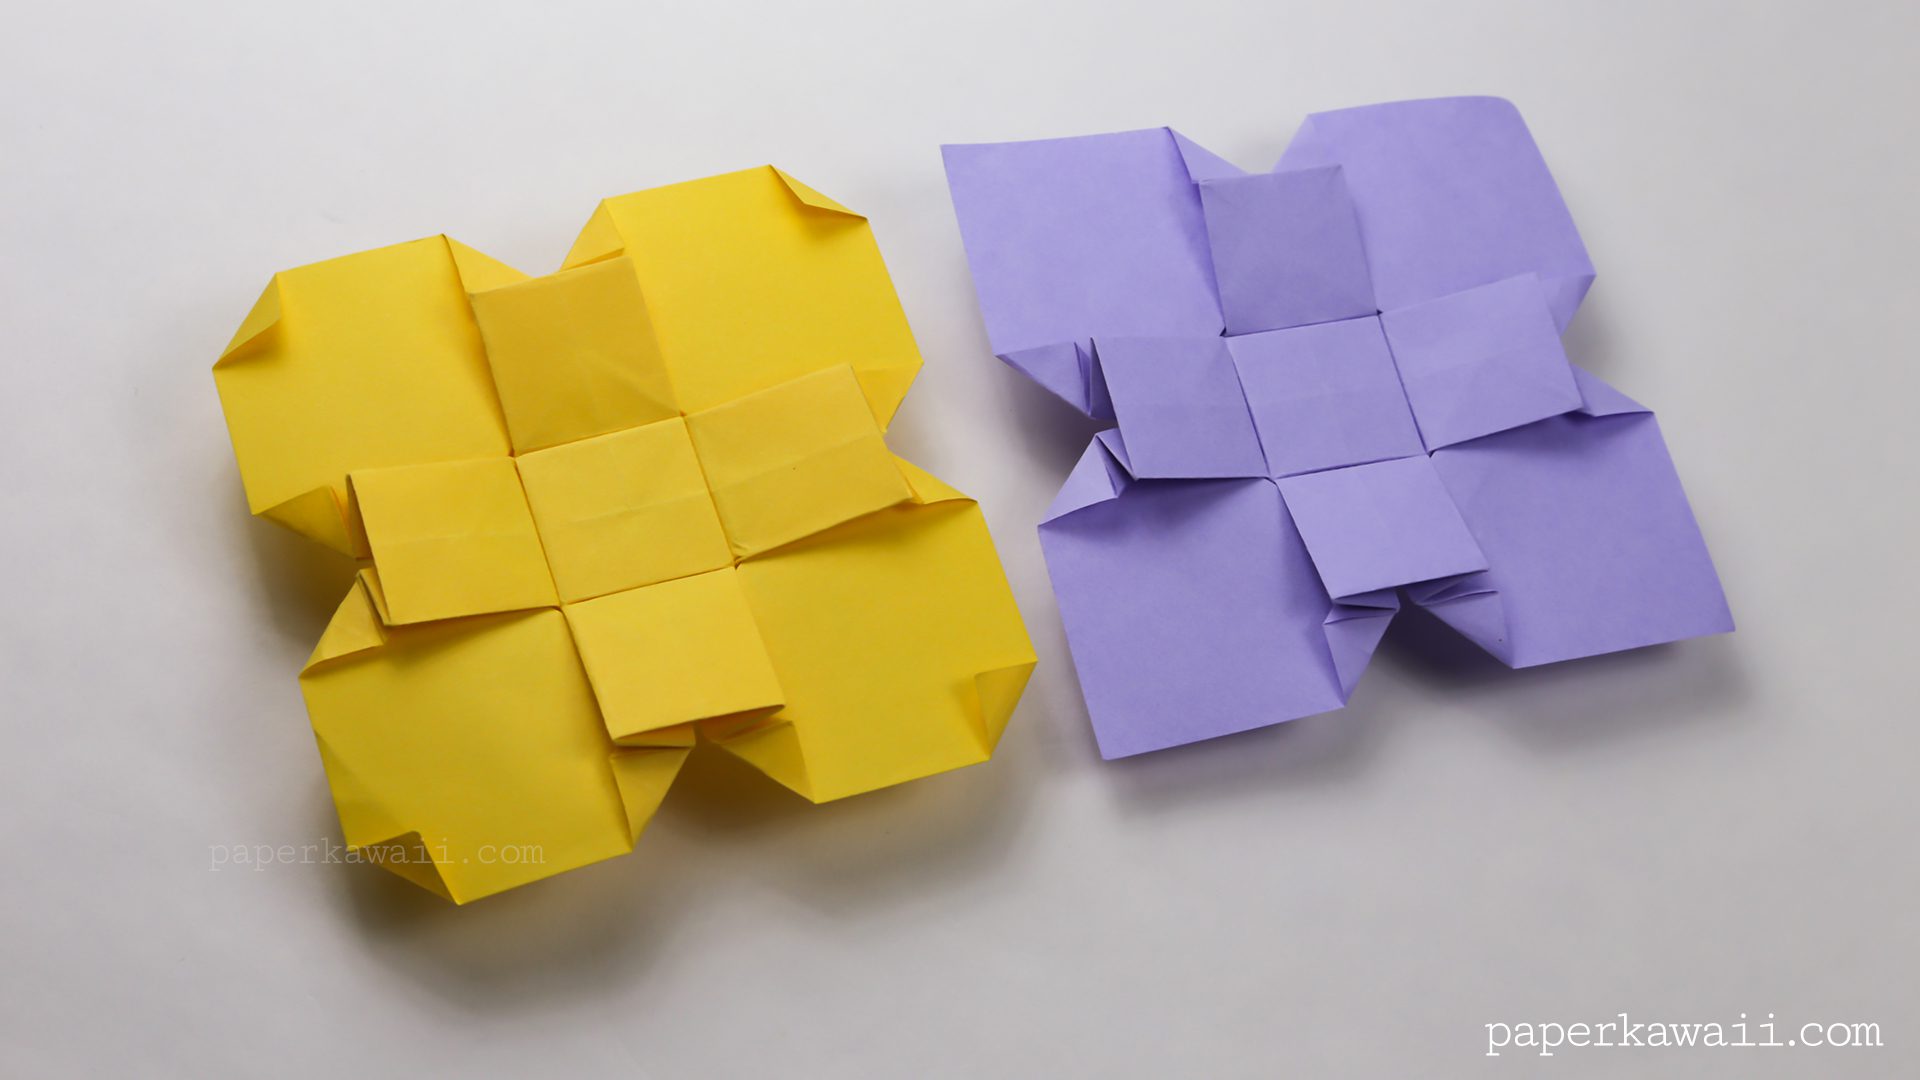 origami clover flower instructions #origami #diy #crafts #clover #flower